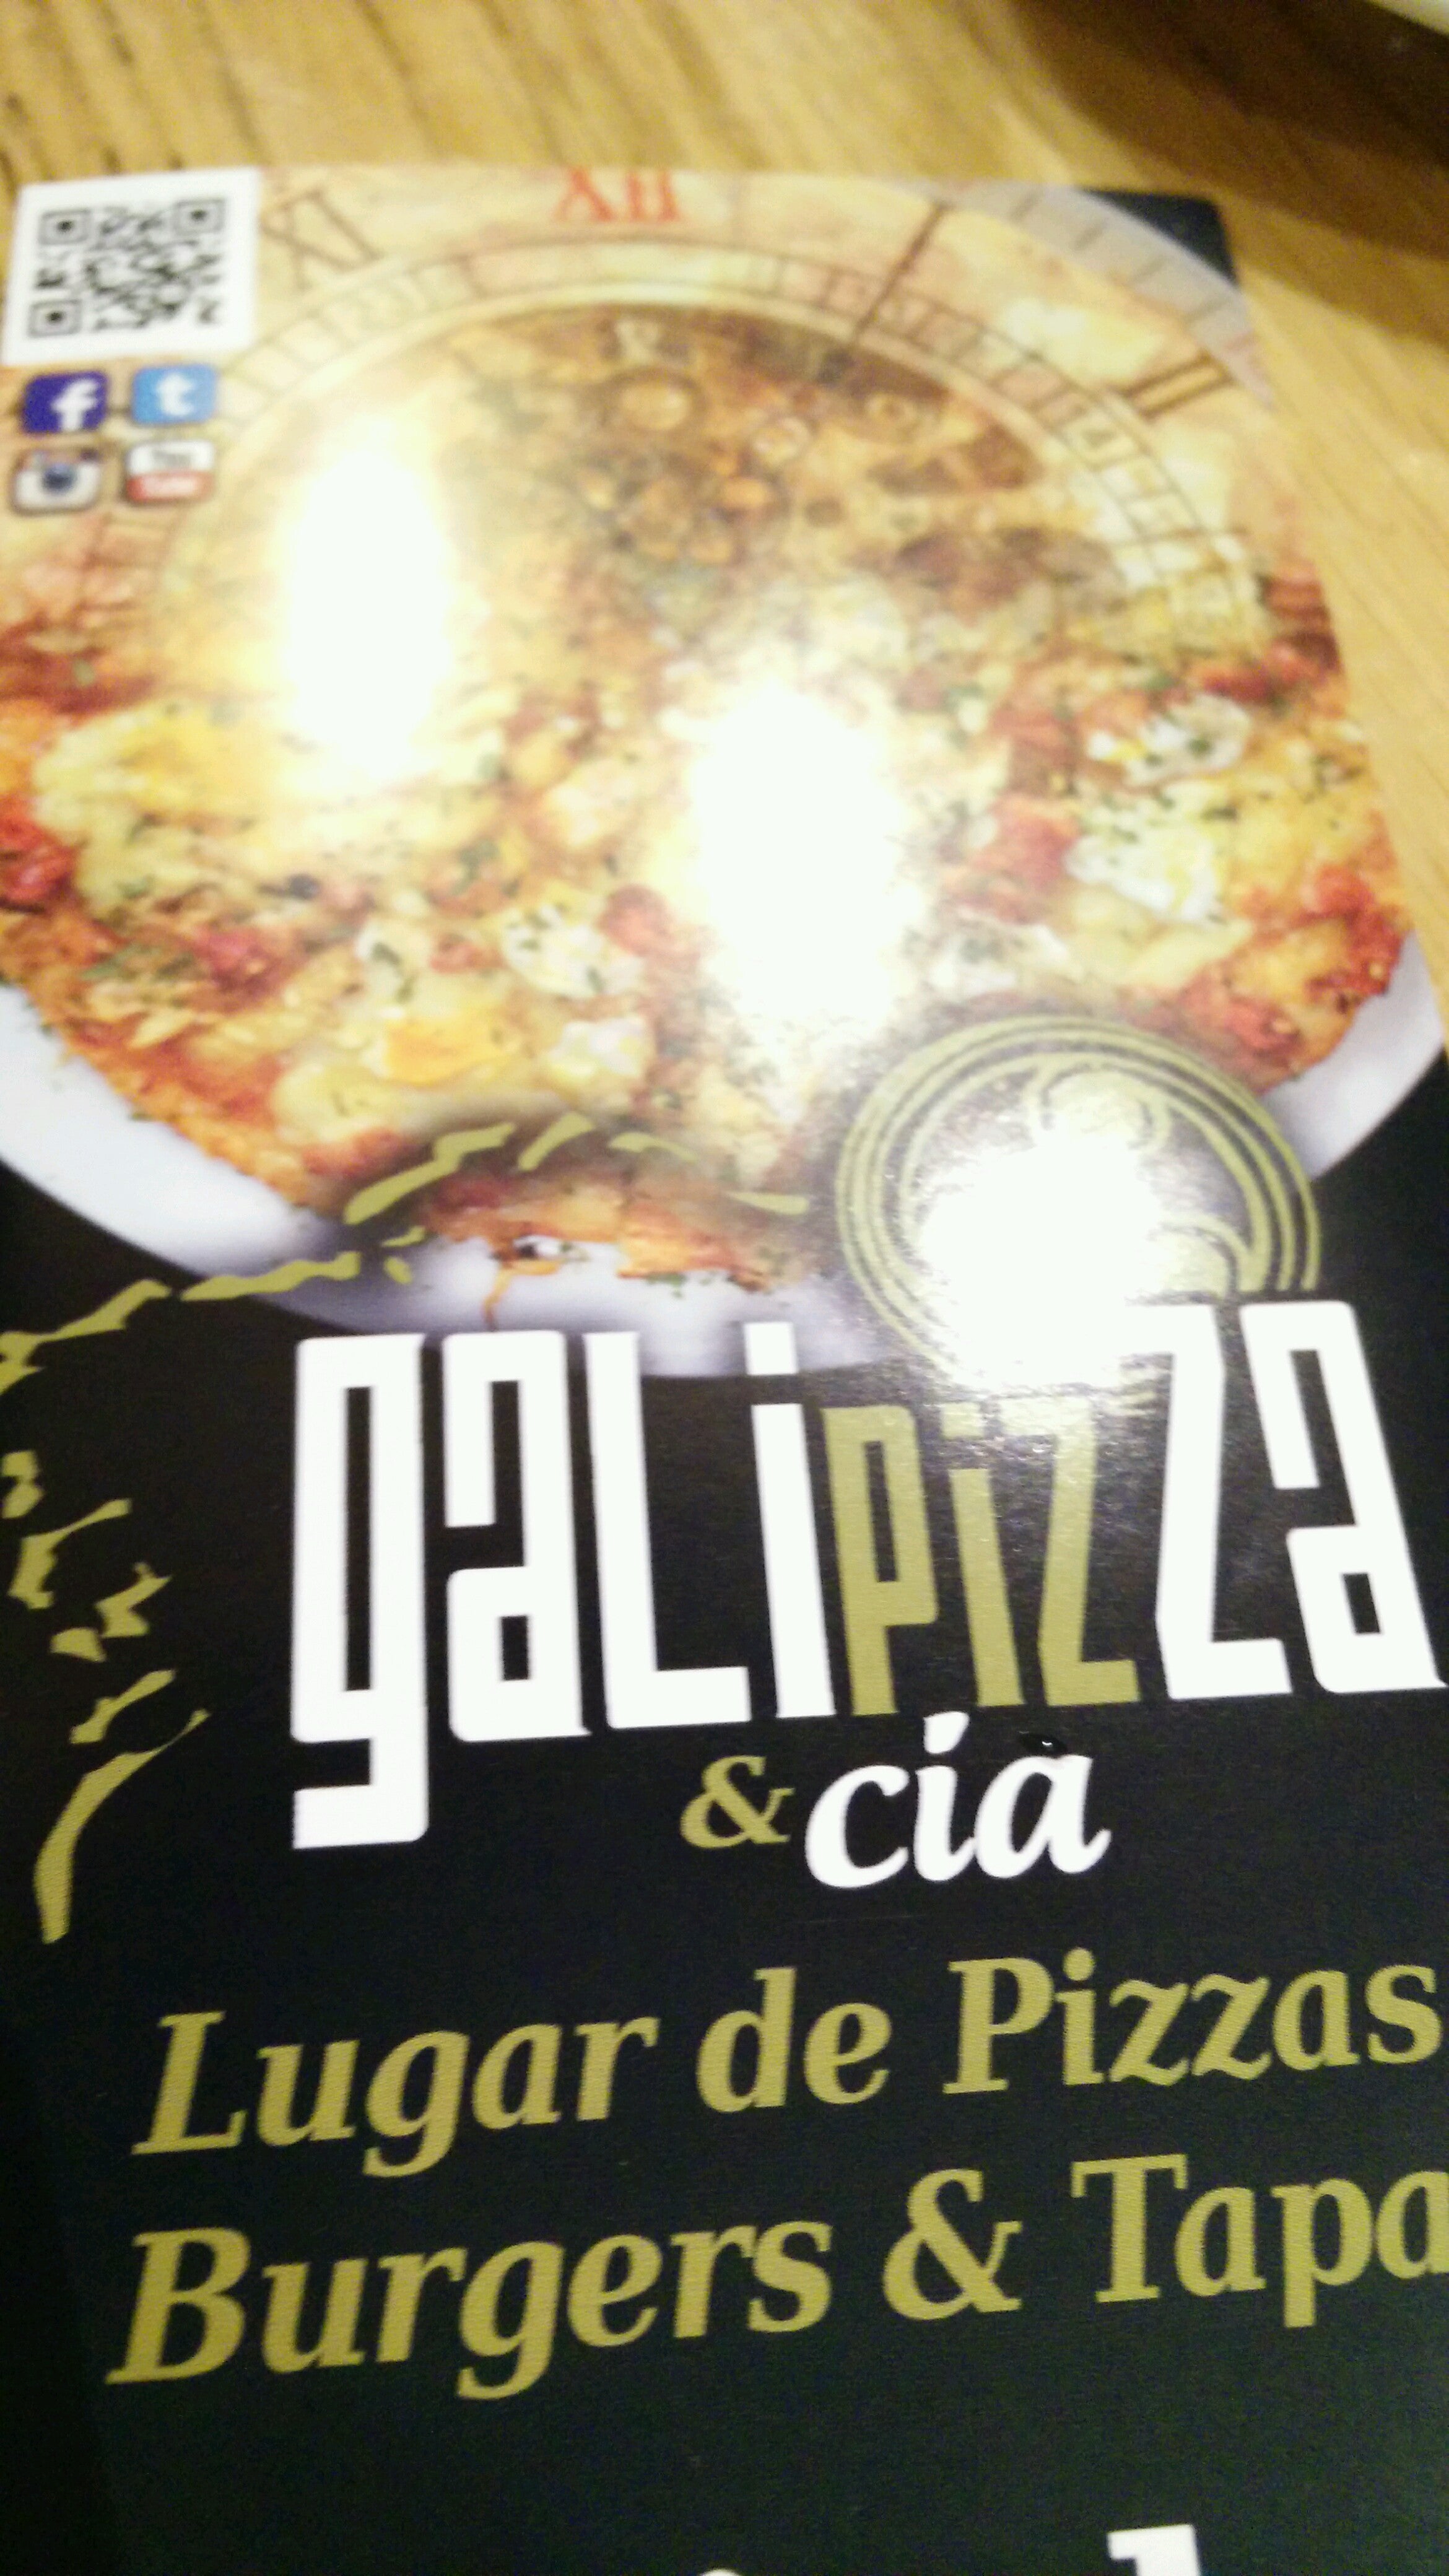 Galipizza